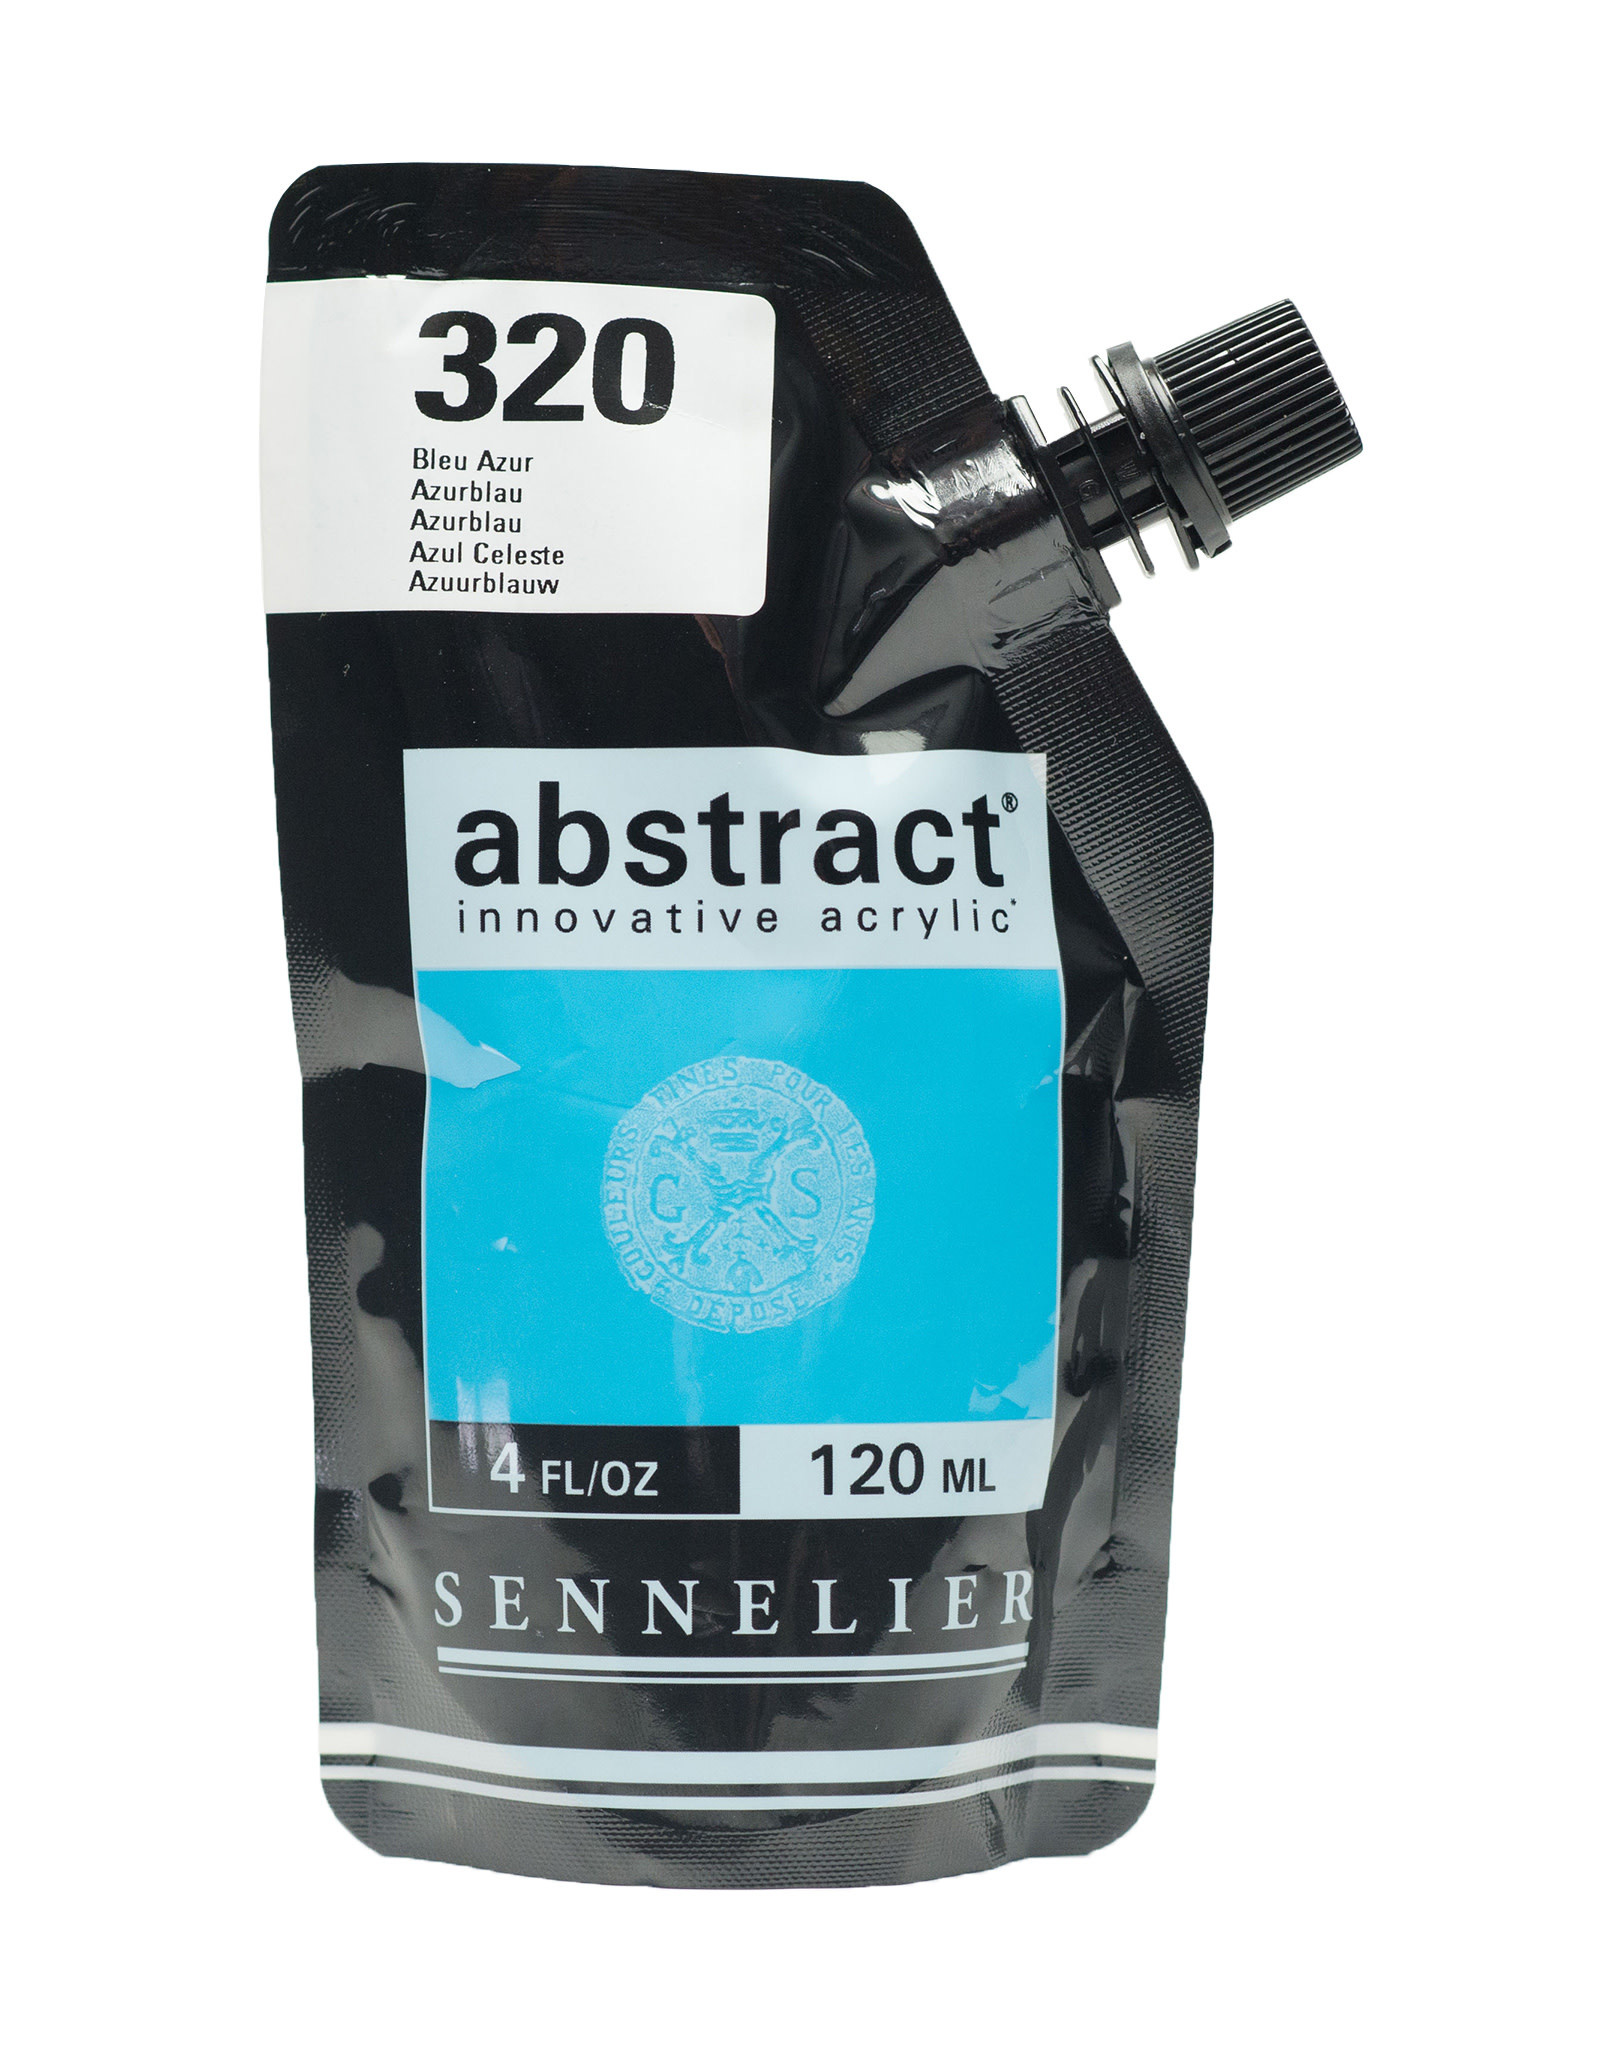 Sennelier Sennelier Abstract Acrylic, Blue Azur 120ml